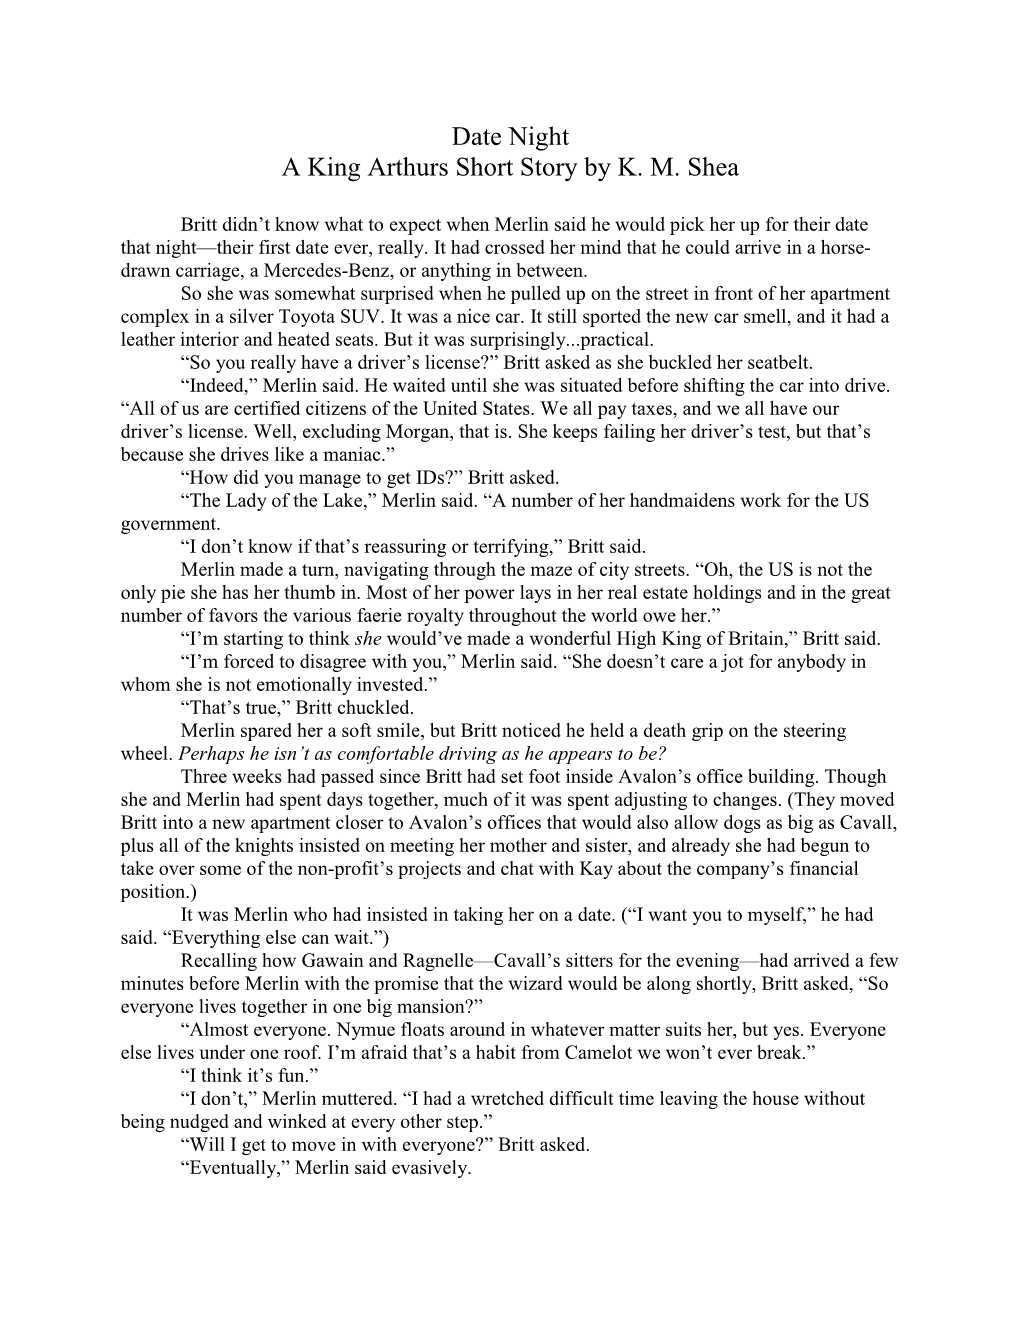 Date Night a King Arthurs Short Story by K. M. Shea